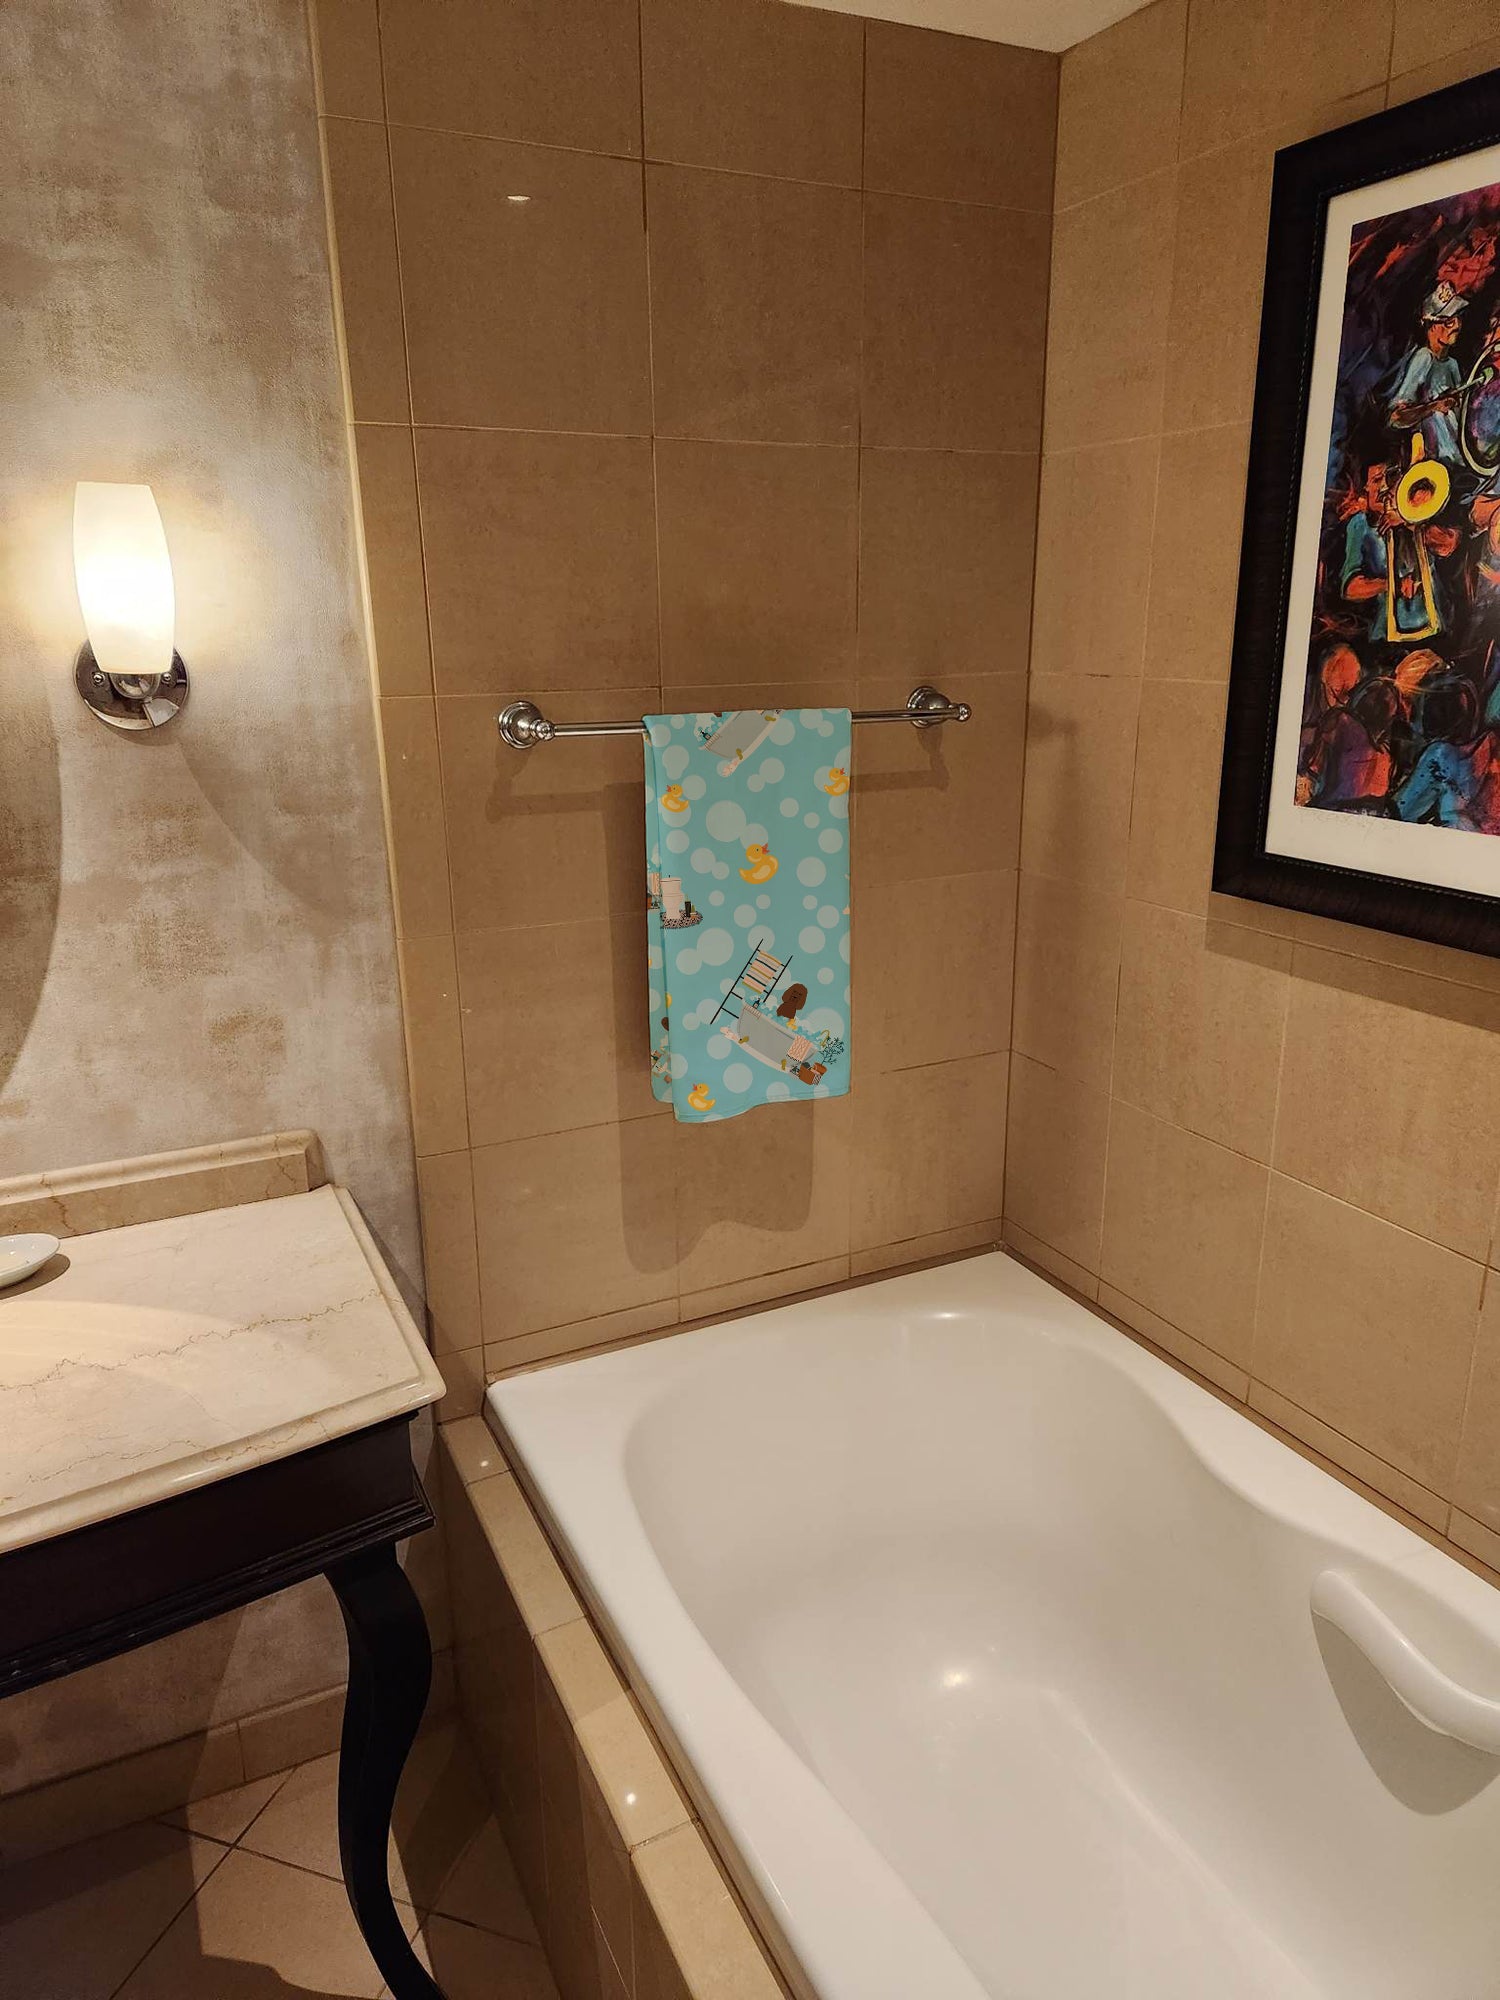 Buy this Irish Water Spaniel in Bathtub Bath Towel Large